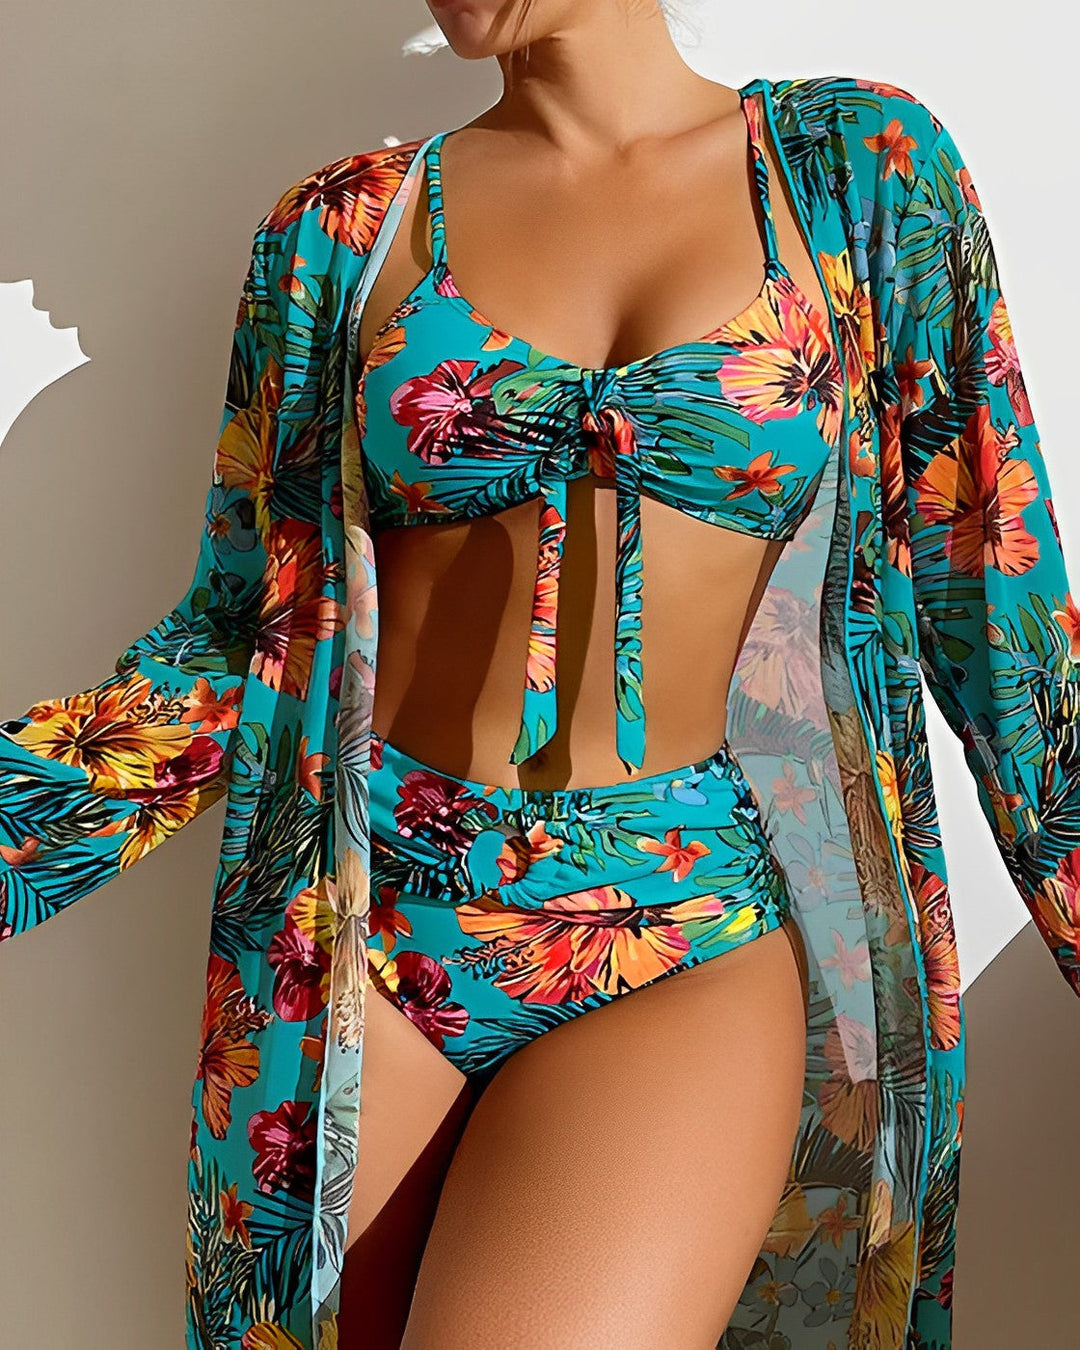 AquaDaze - Fashionable Bikini Set for Summer '23